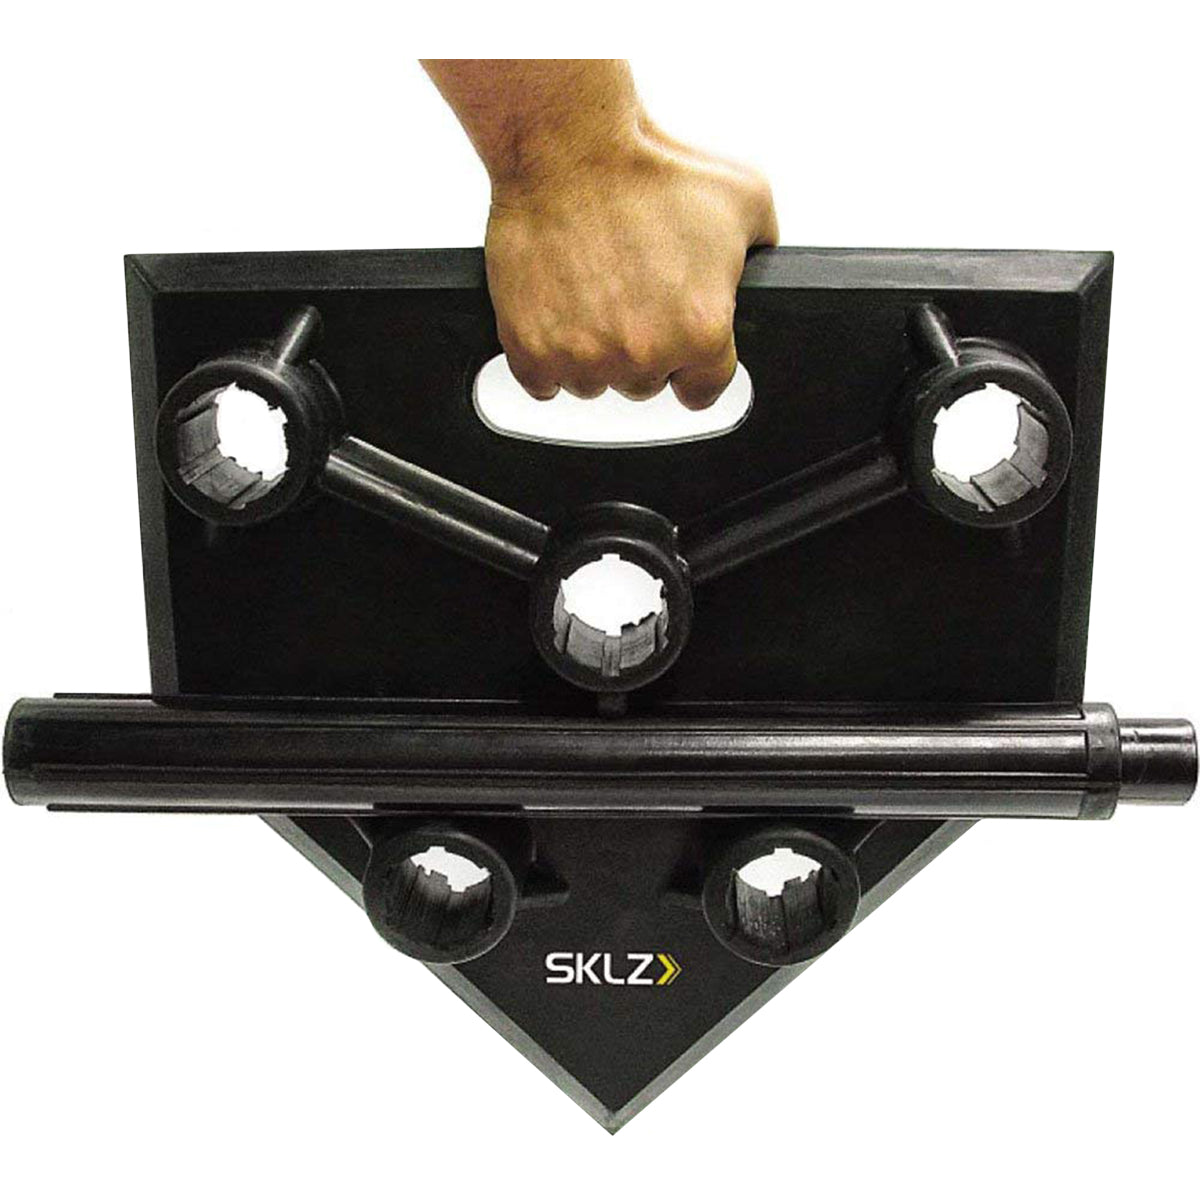 SKLZ 5-Position Batting Training Tee - Black SKLZ